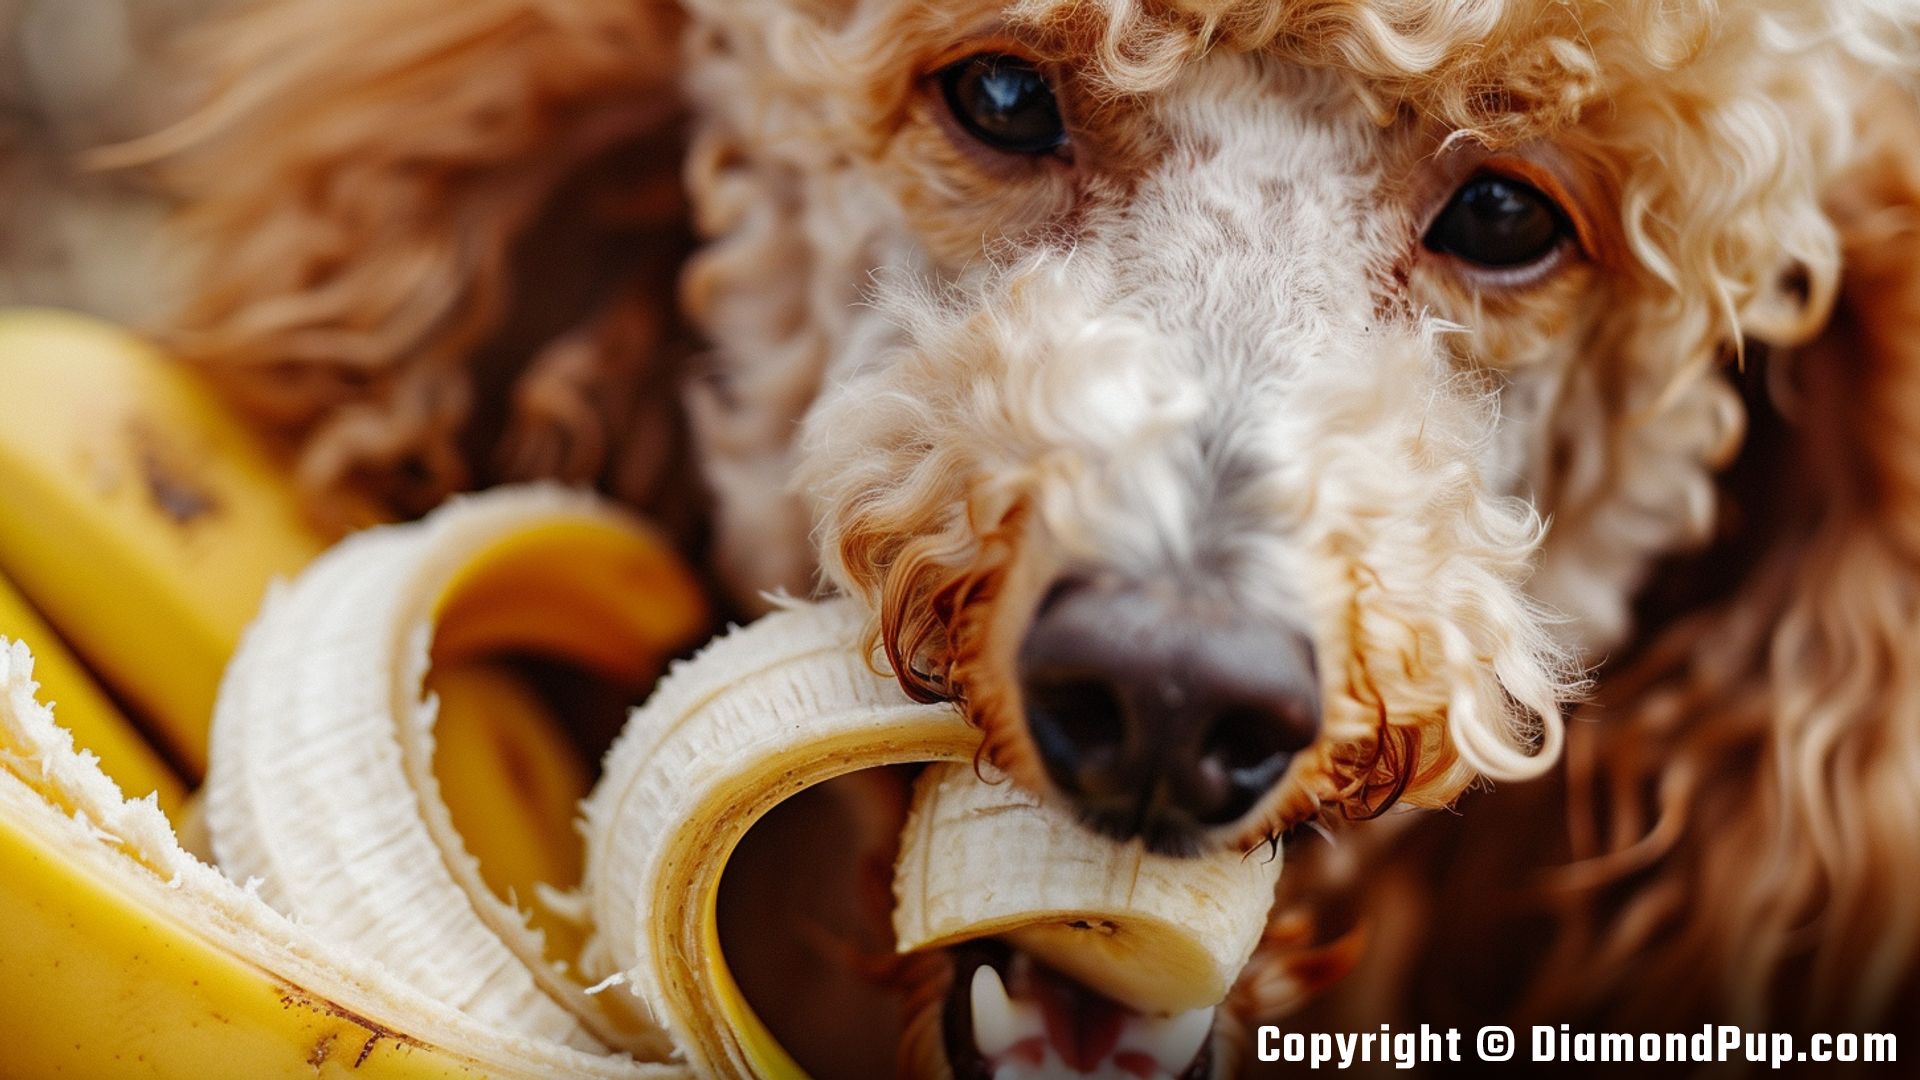 Photograph of an Adorable Poodle Eating Banana